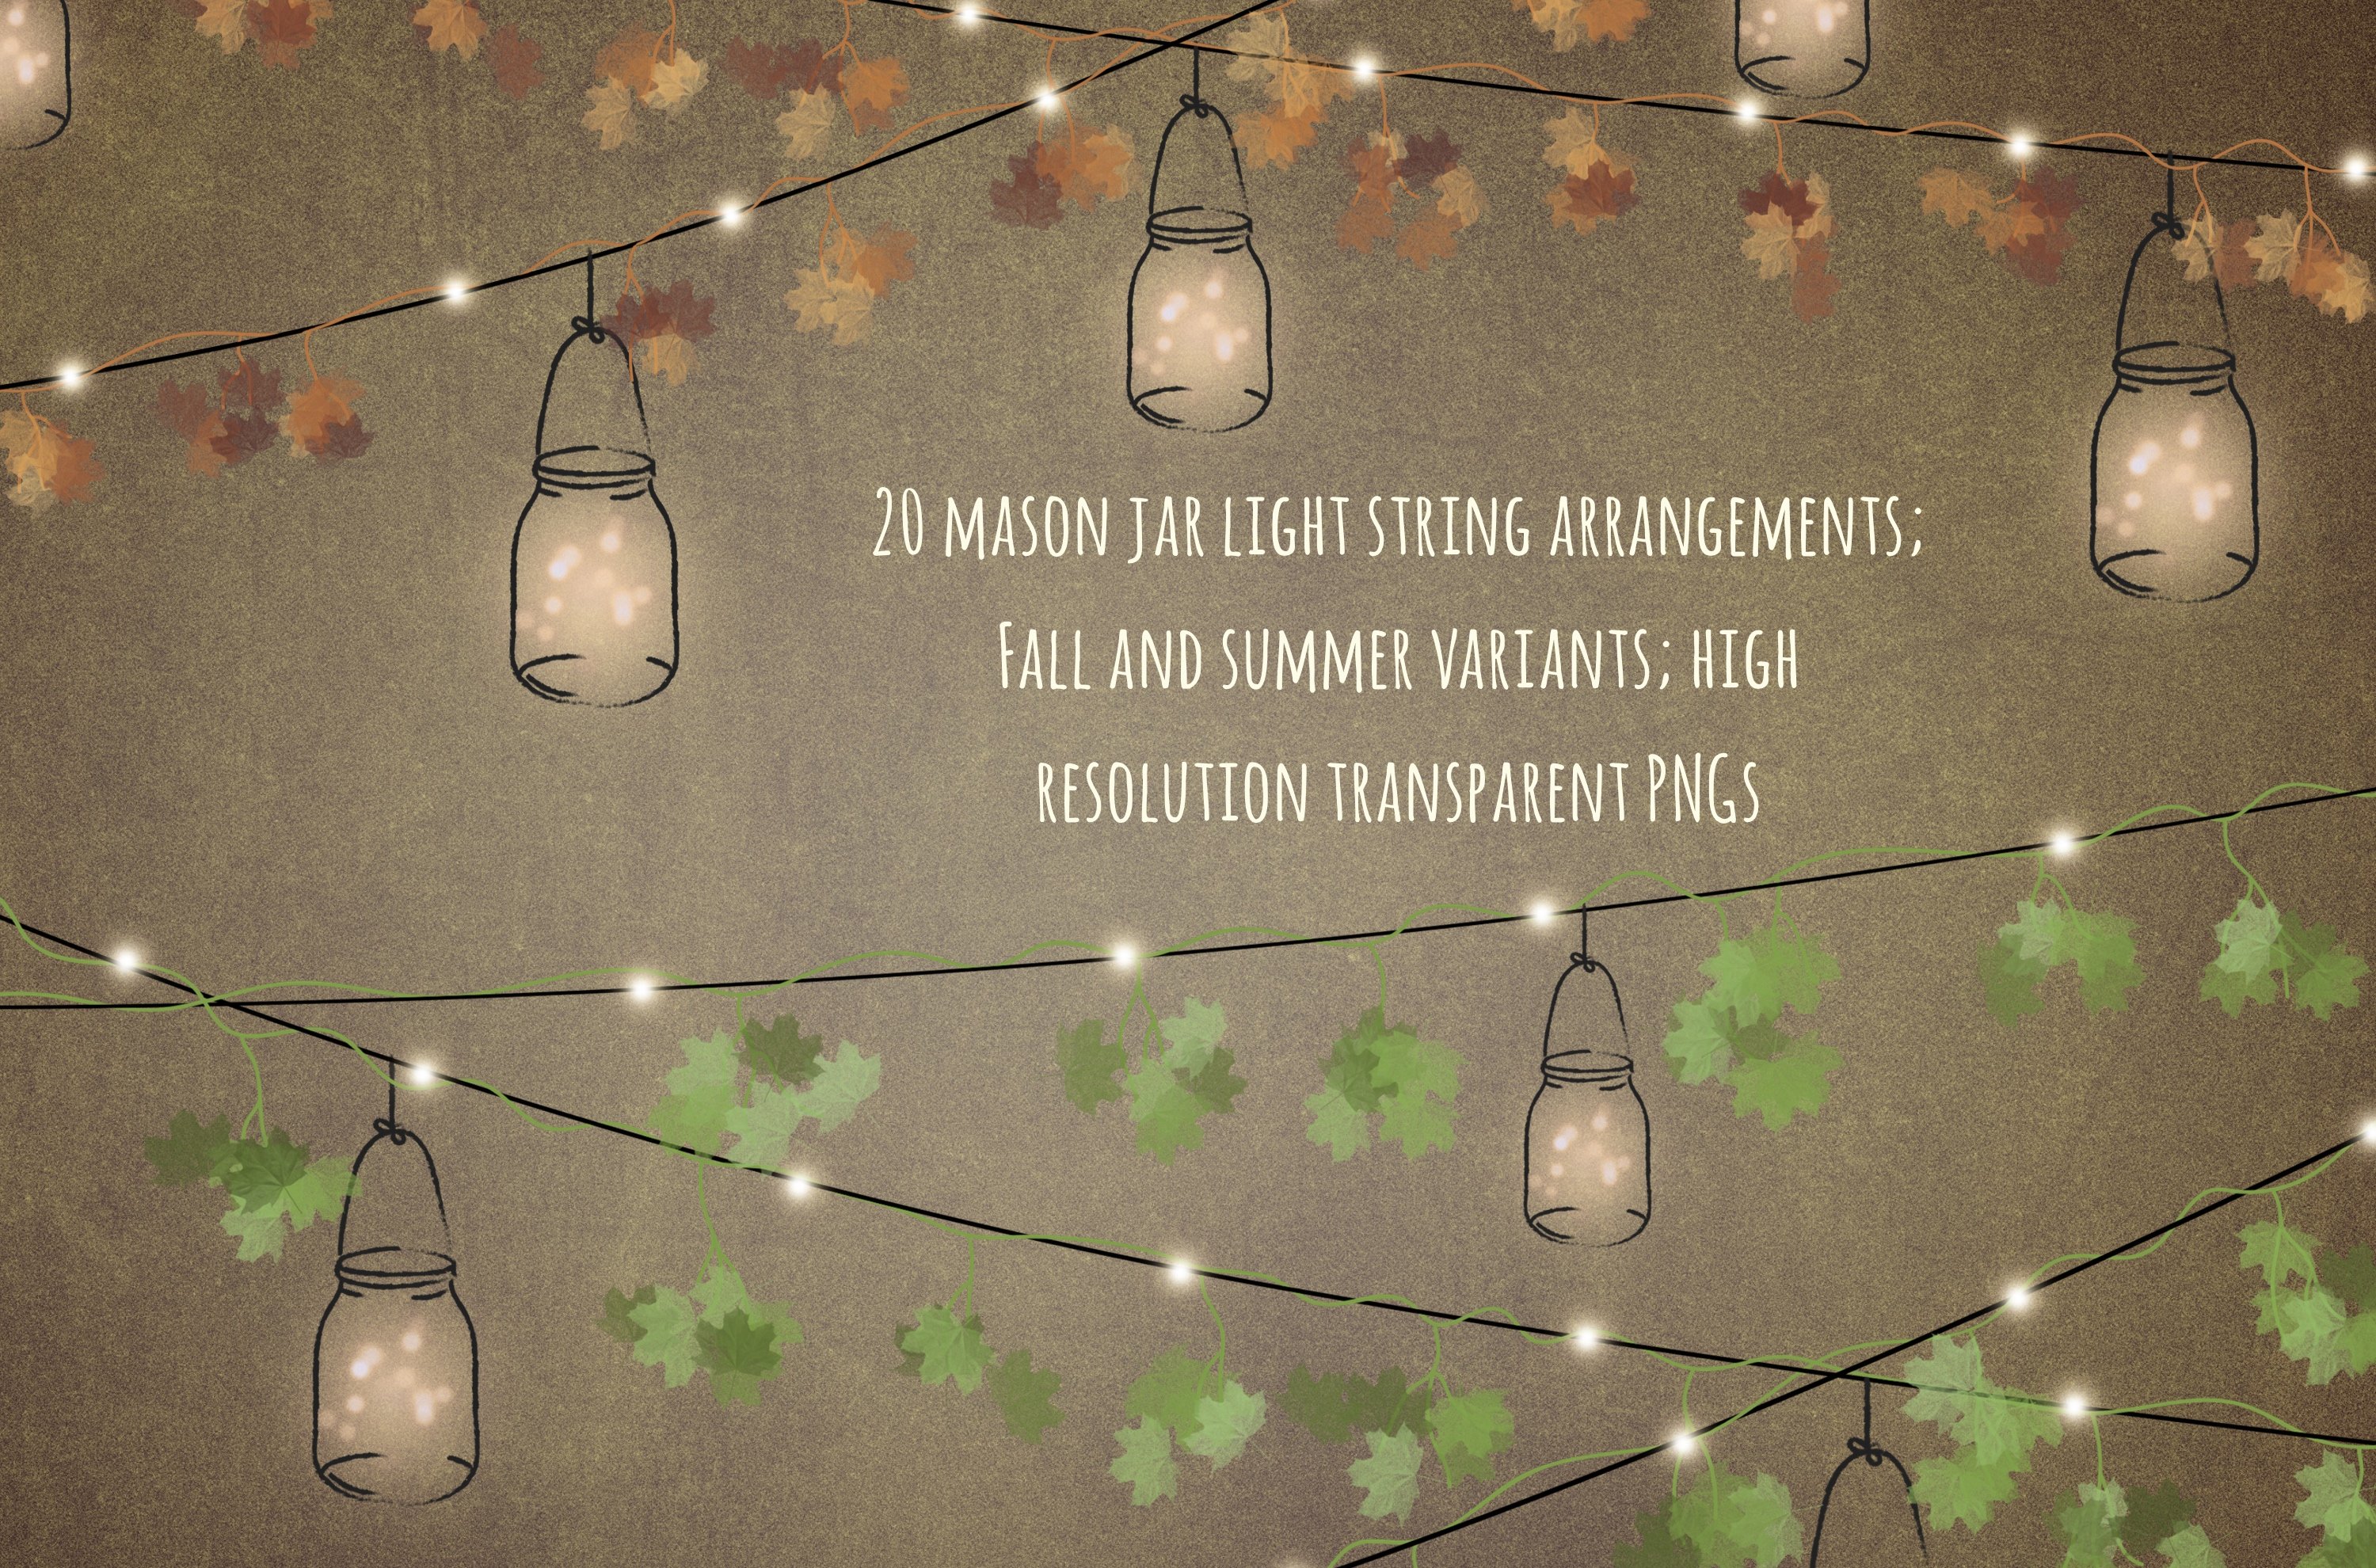 Mason jar lights + vines overlays preview image.